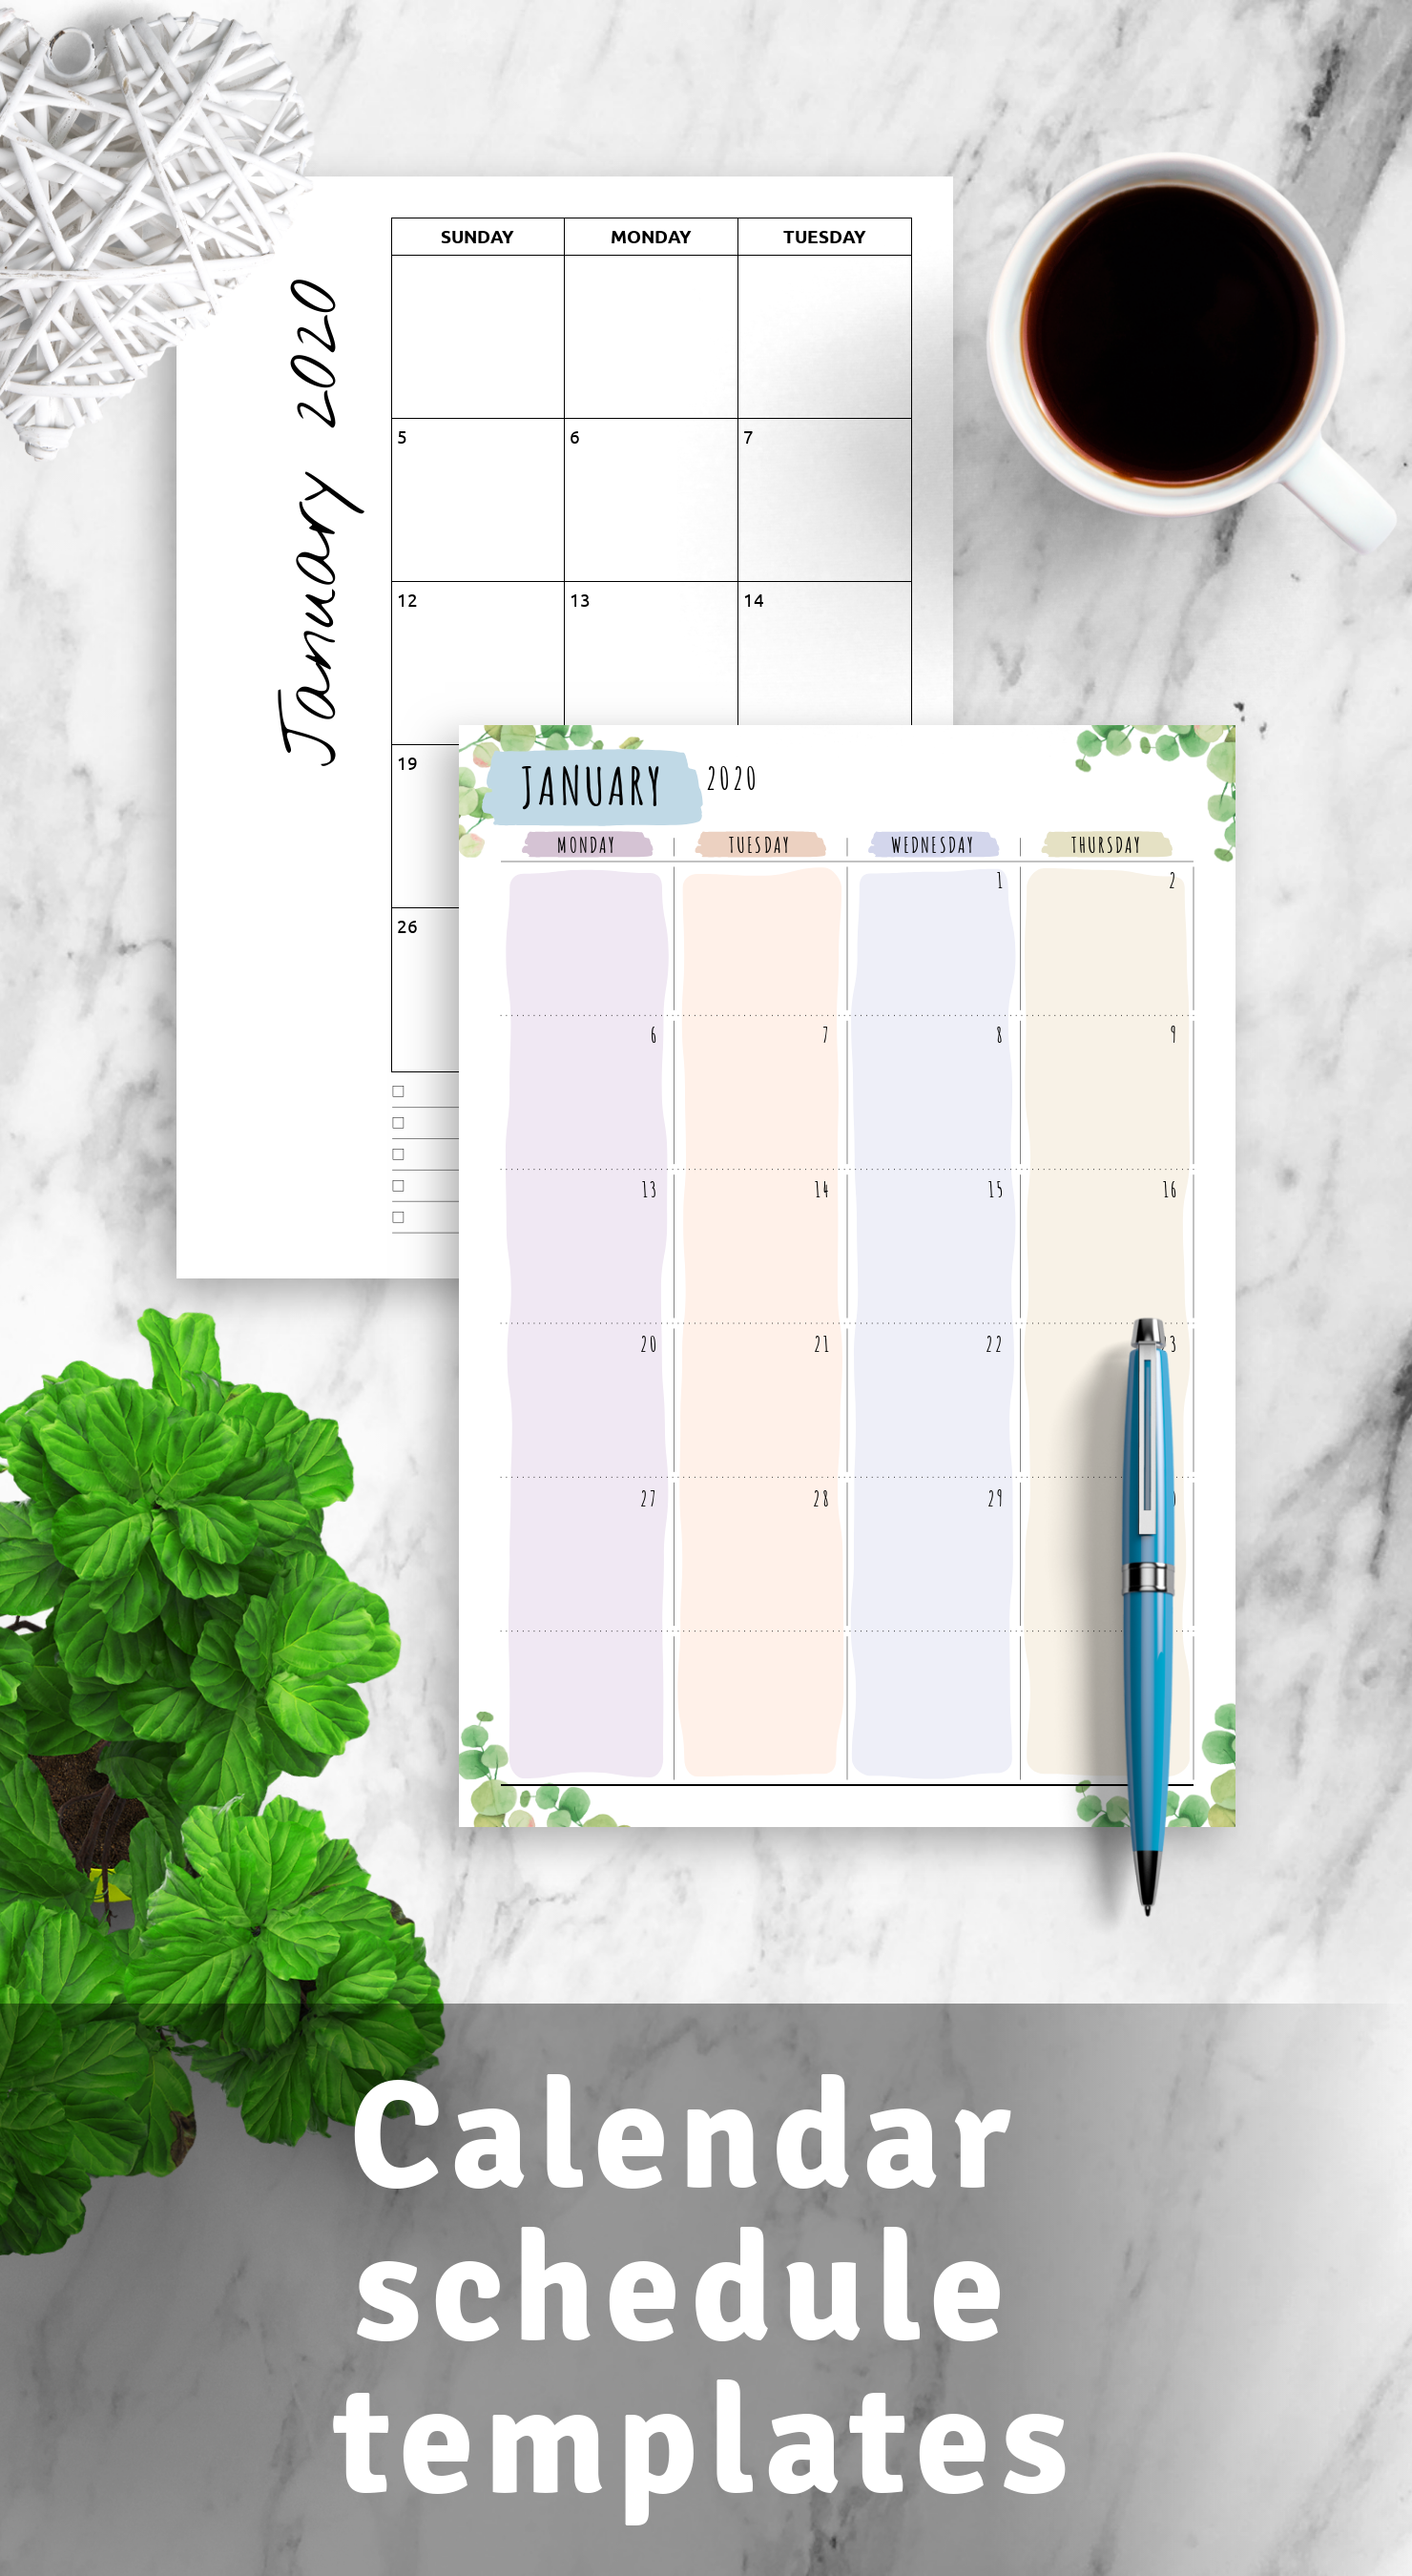 Calendar schedule templates PDF